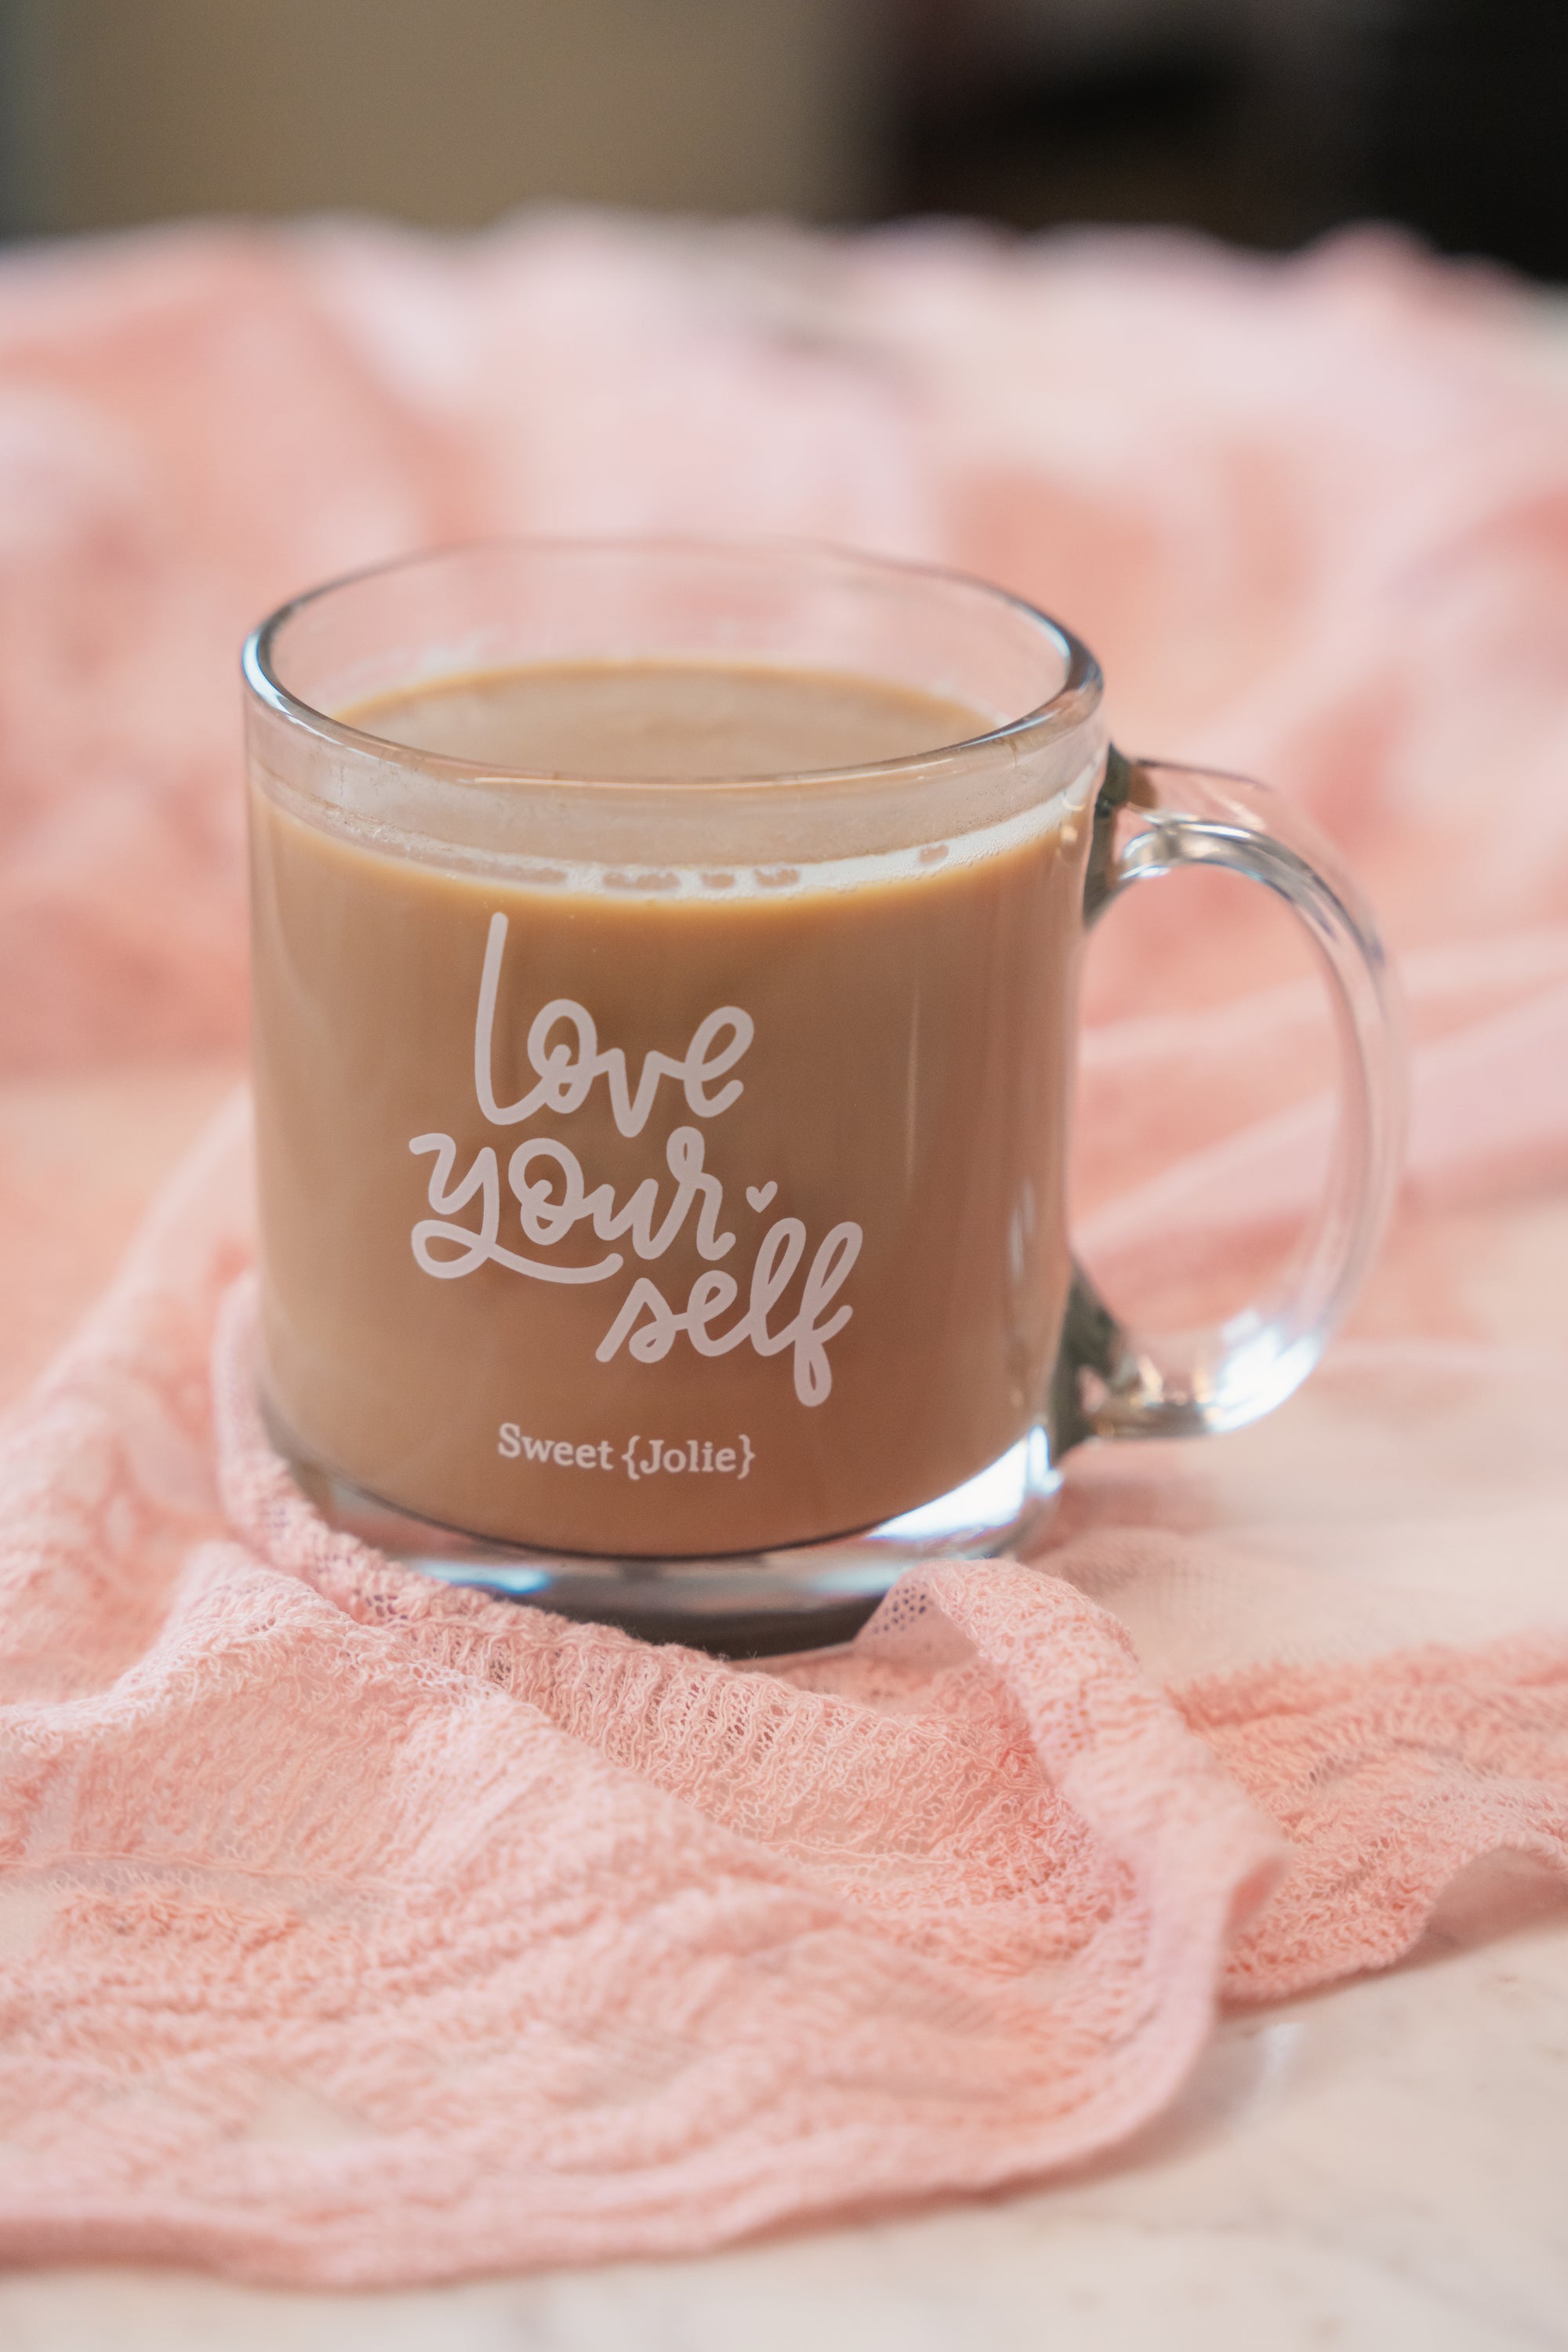 The Love Yourself Mug